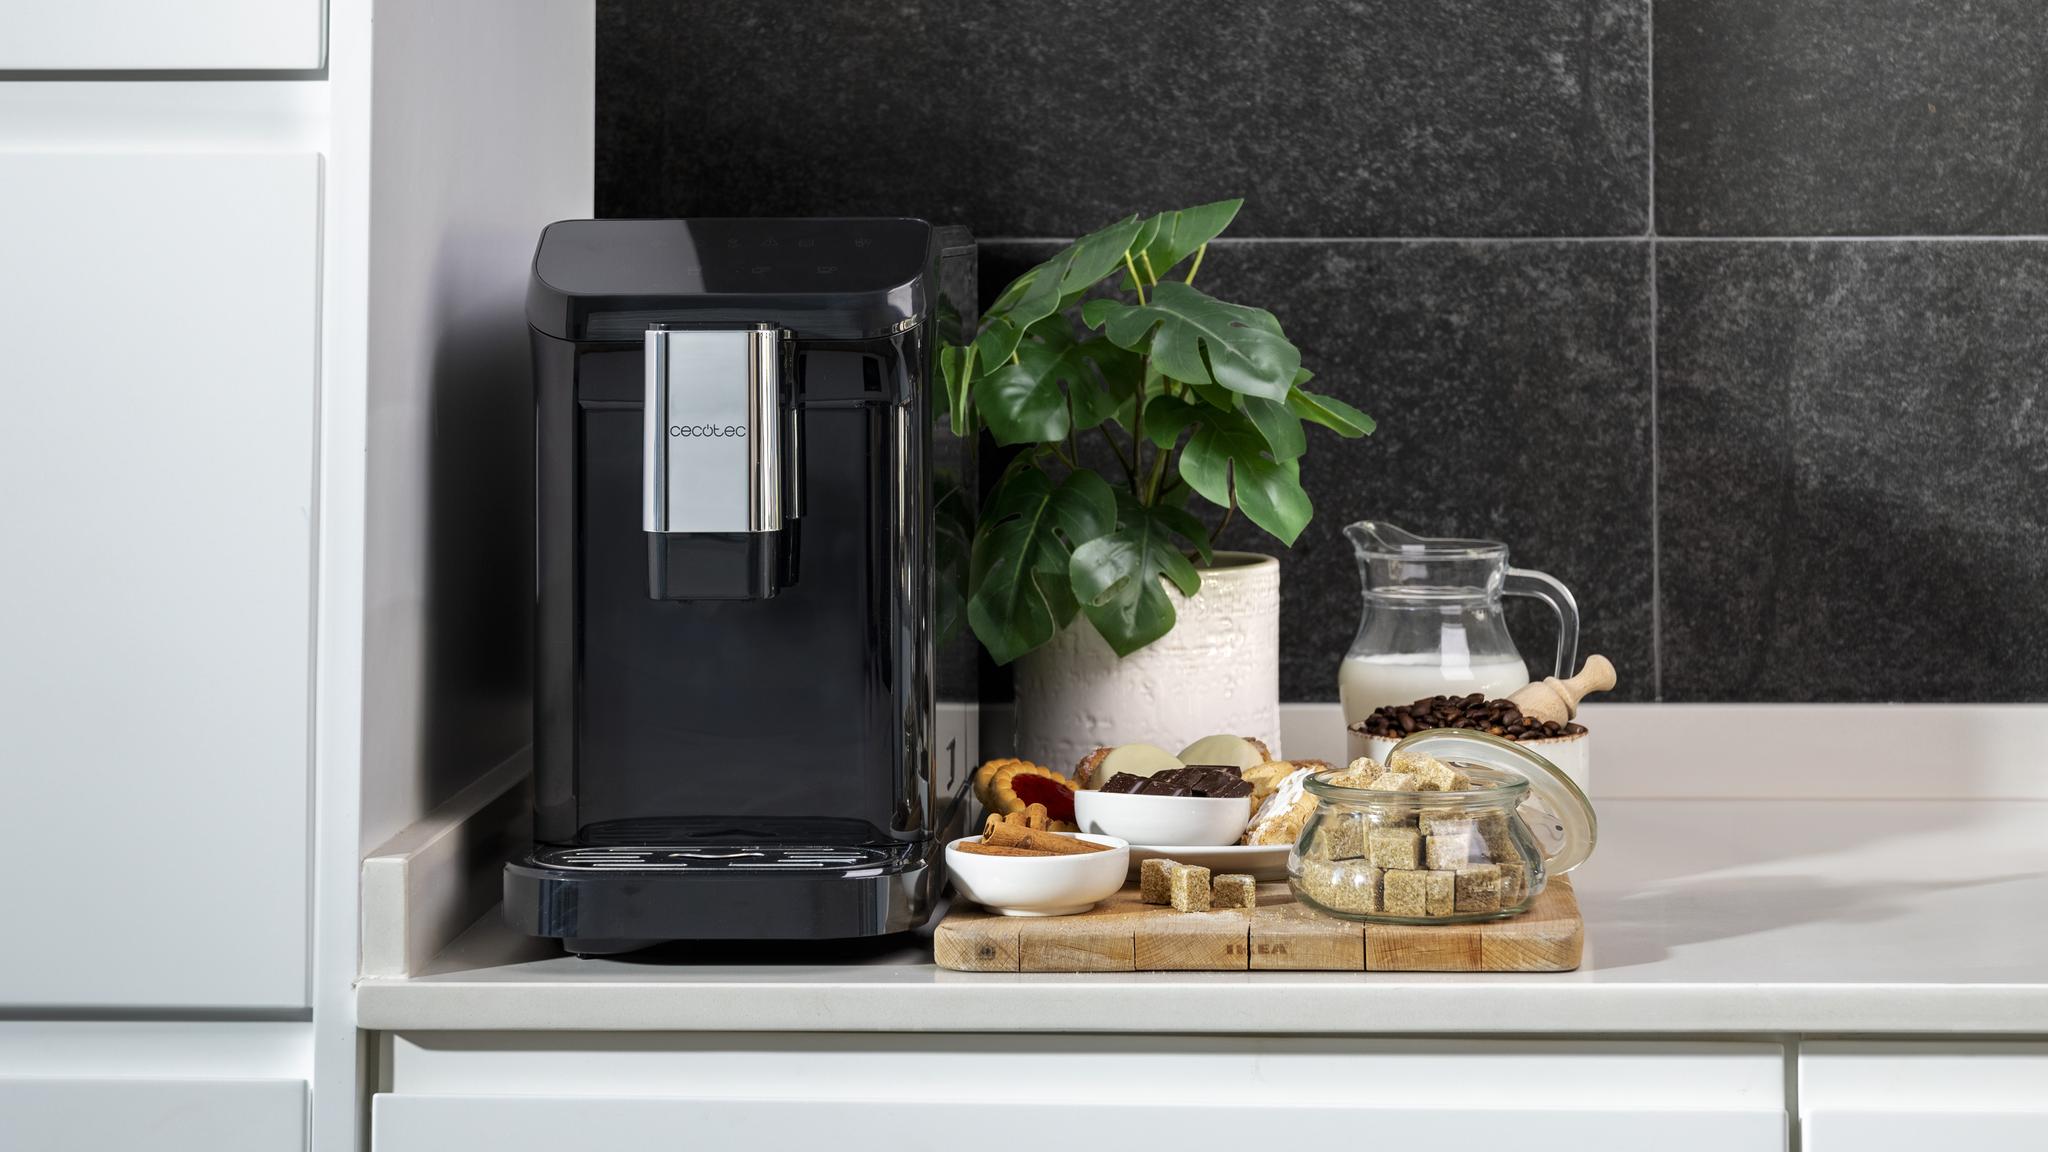 Cafetera superautomática - Cecotec Cremmaet CompactCcino Black, 19 bar,  1350 W, 400 ml, Altura regulable, Display táctil, Molinillo integrado, Black